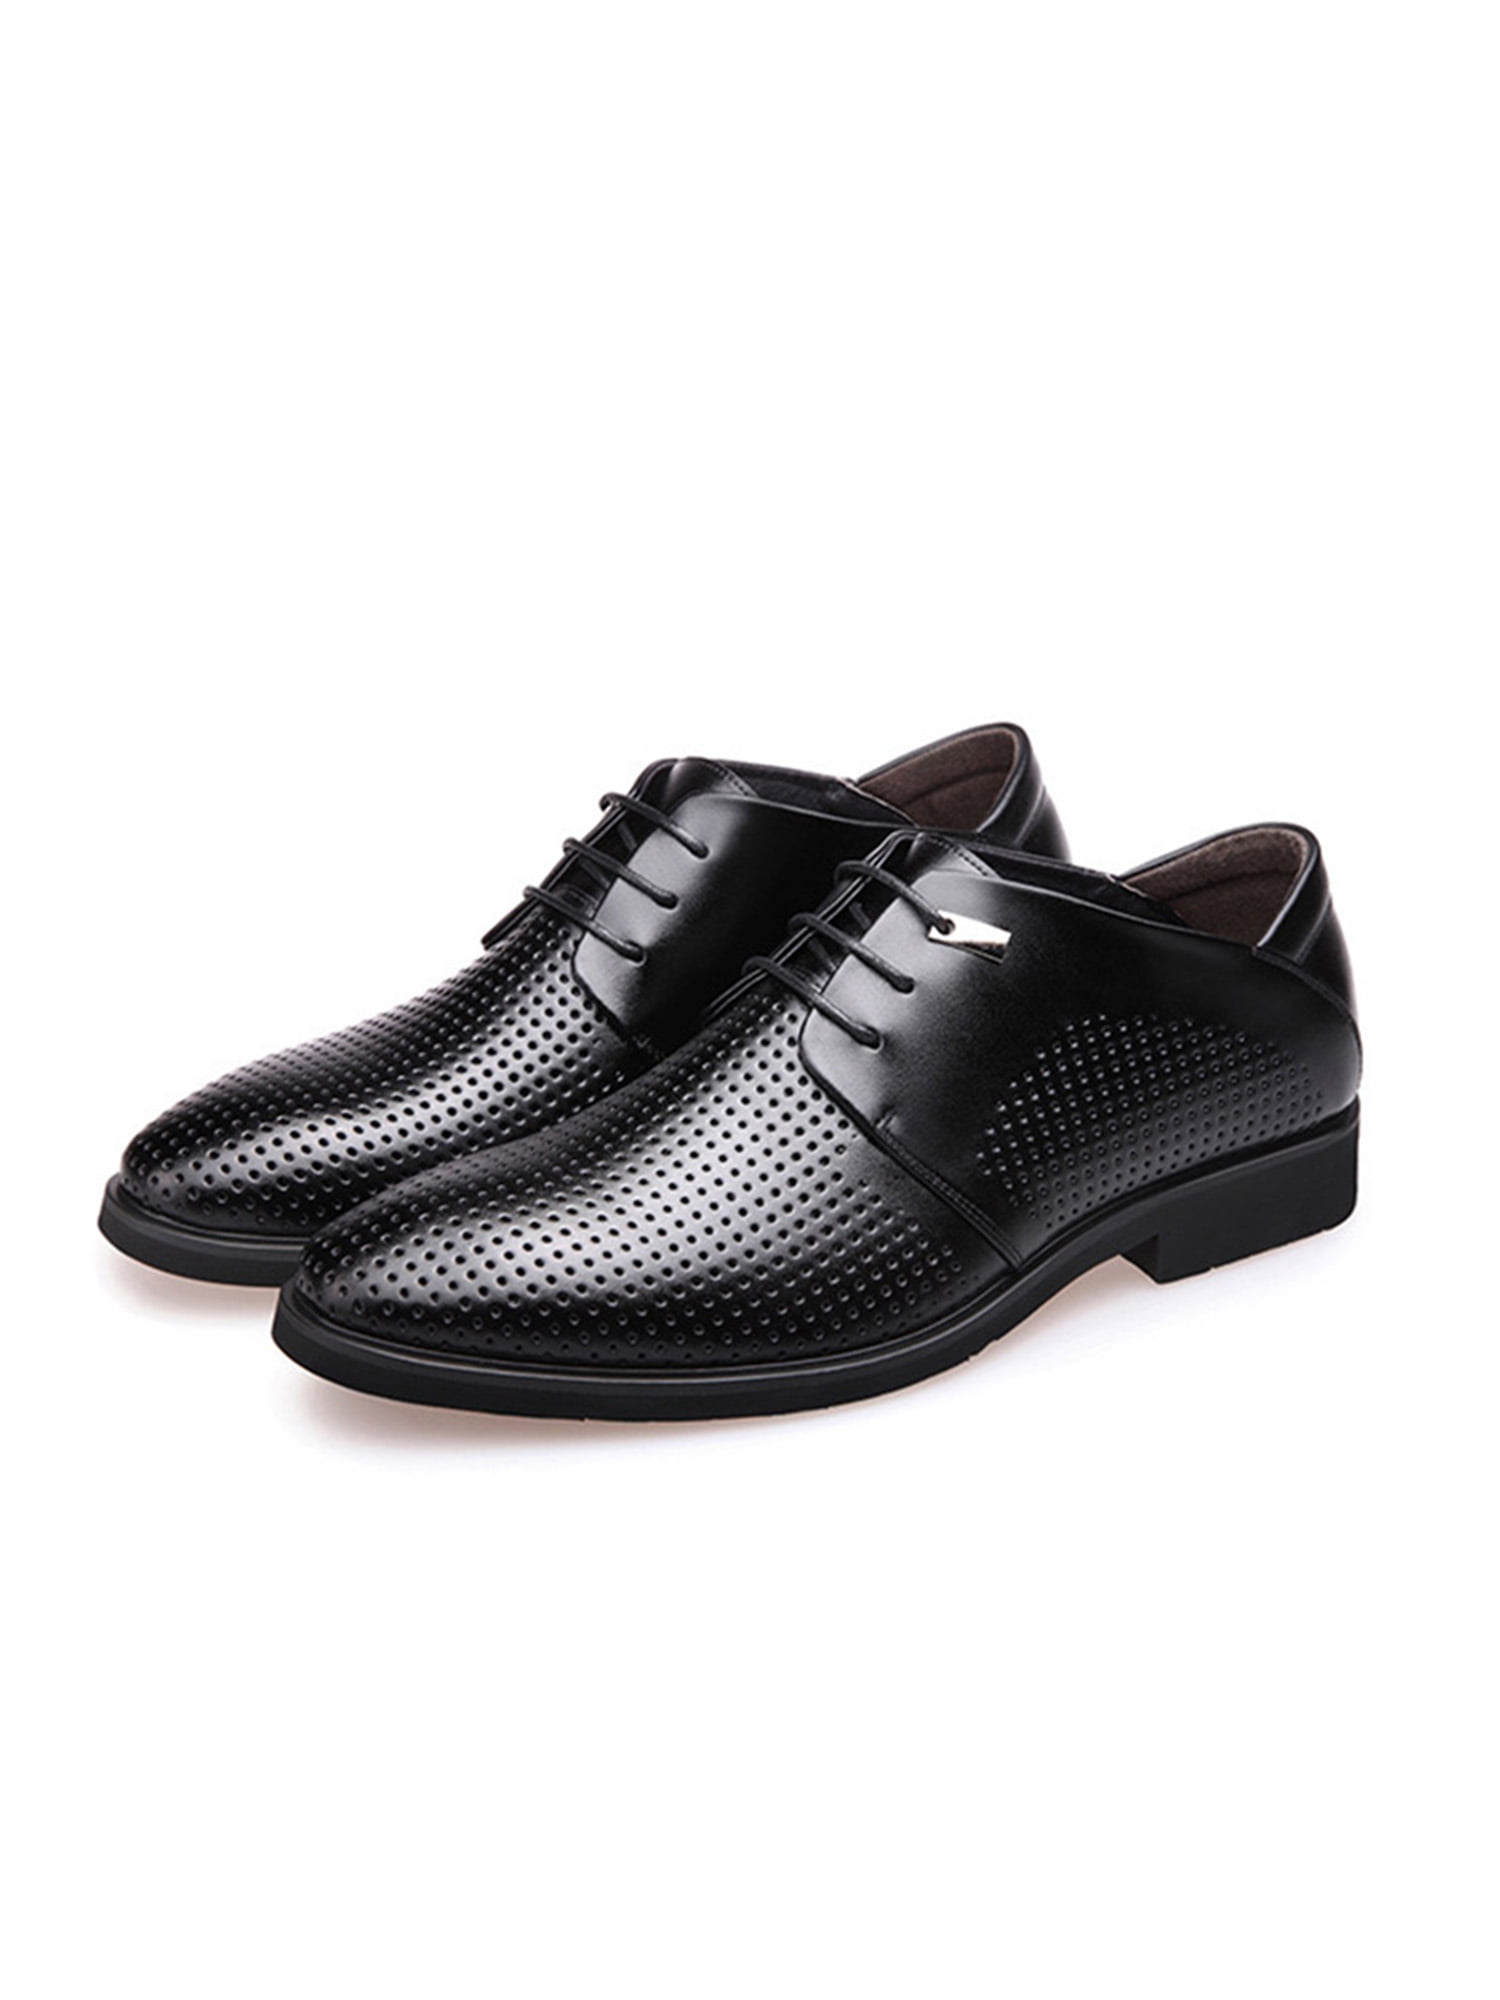 Anti Slip Sole Work School Weddings Mens 100% Leather Pointed Toe Smart Shoe 